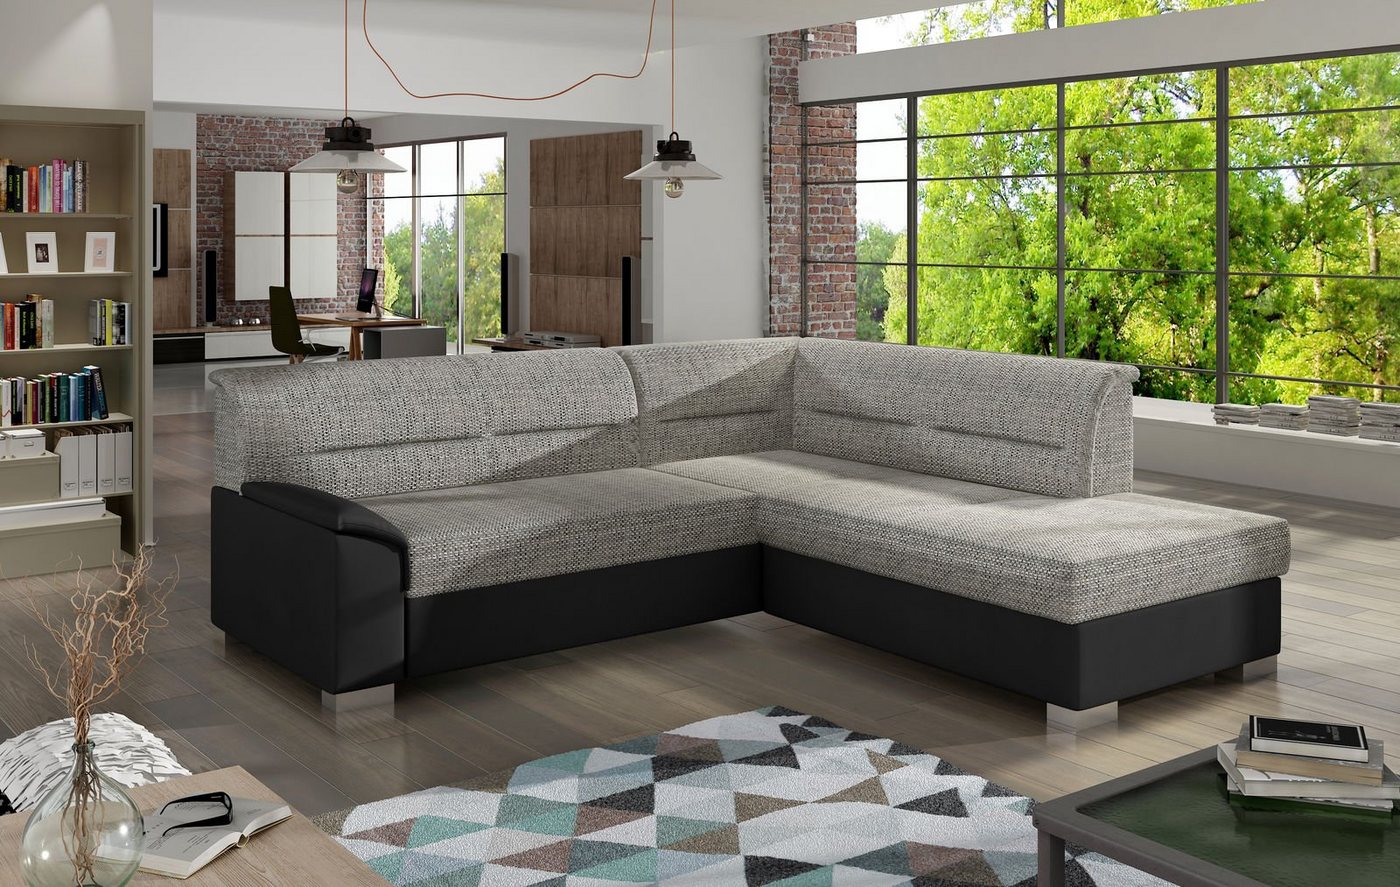 JVmoebel Ecksofa Design Ecksofa Schlafsofa Bettfunktion Couch Leder Textil Polster, Mit Bettfunktion von JVmoebel